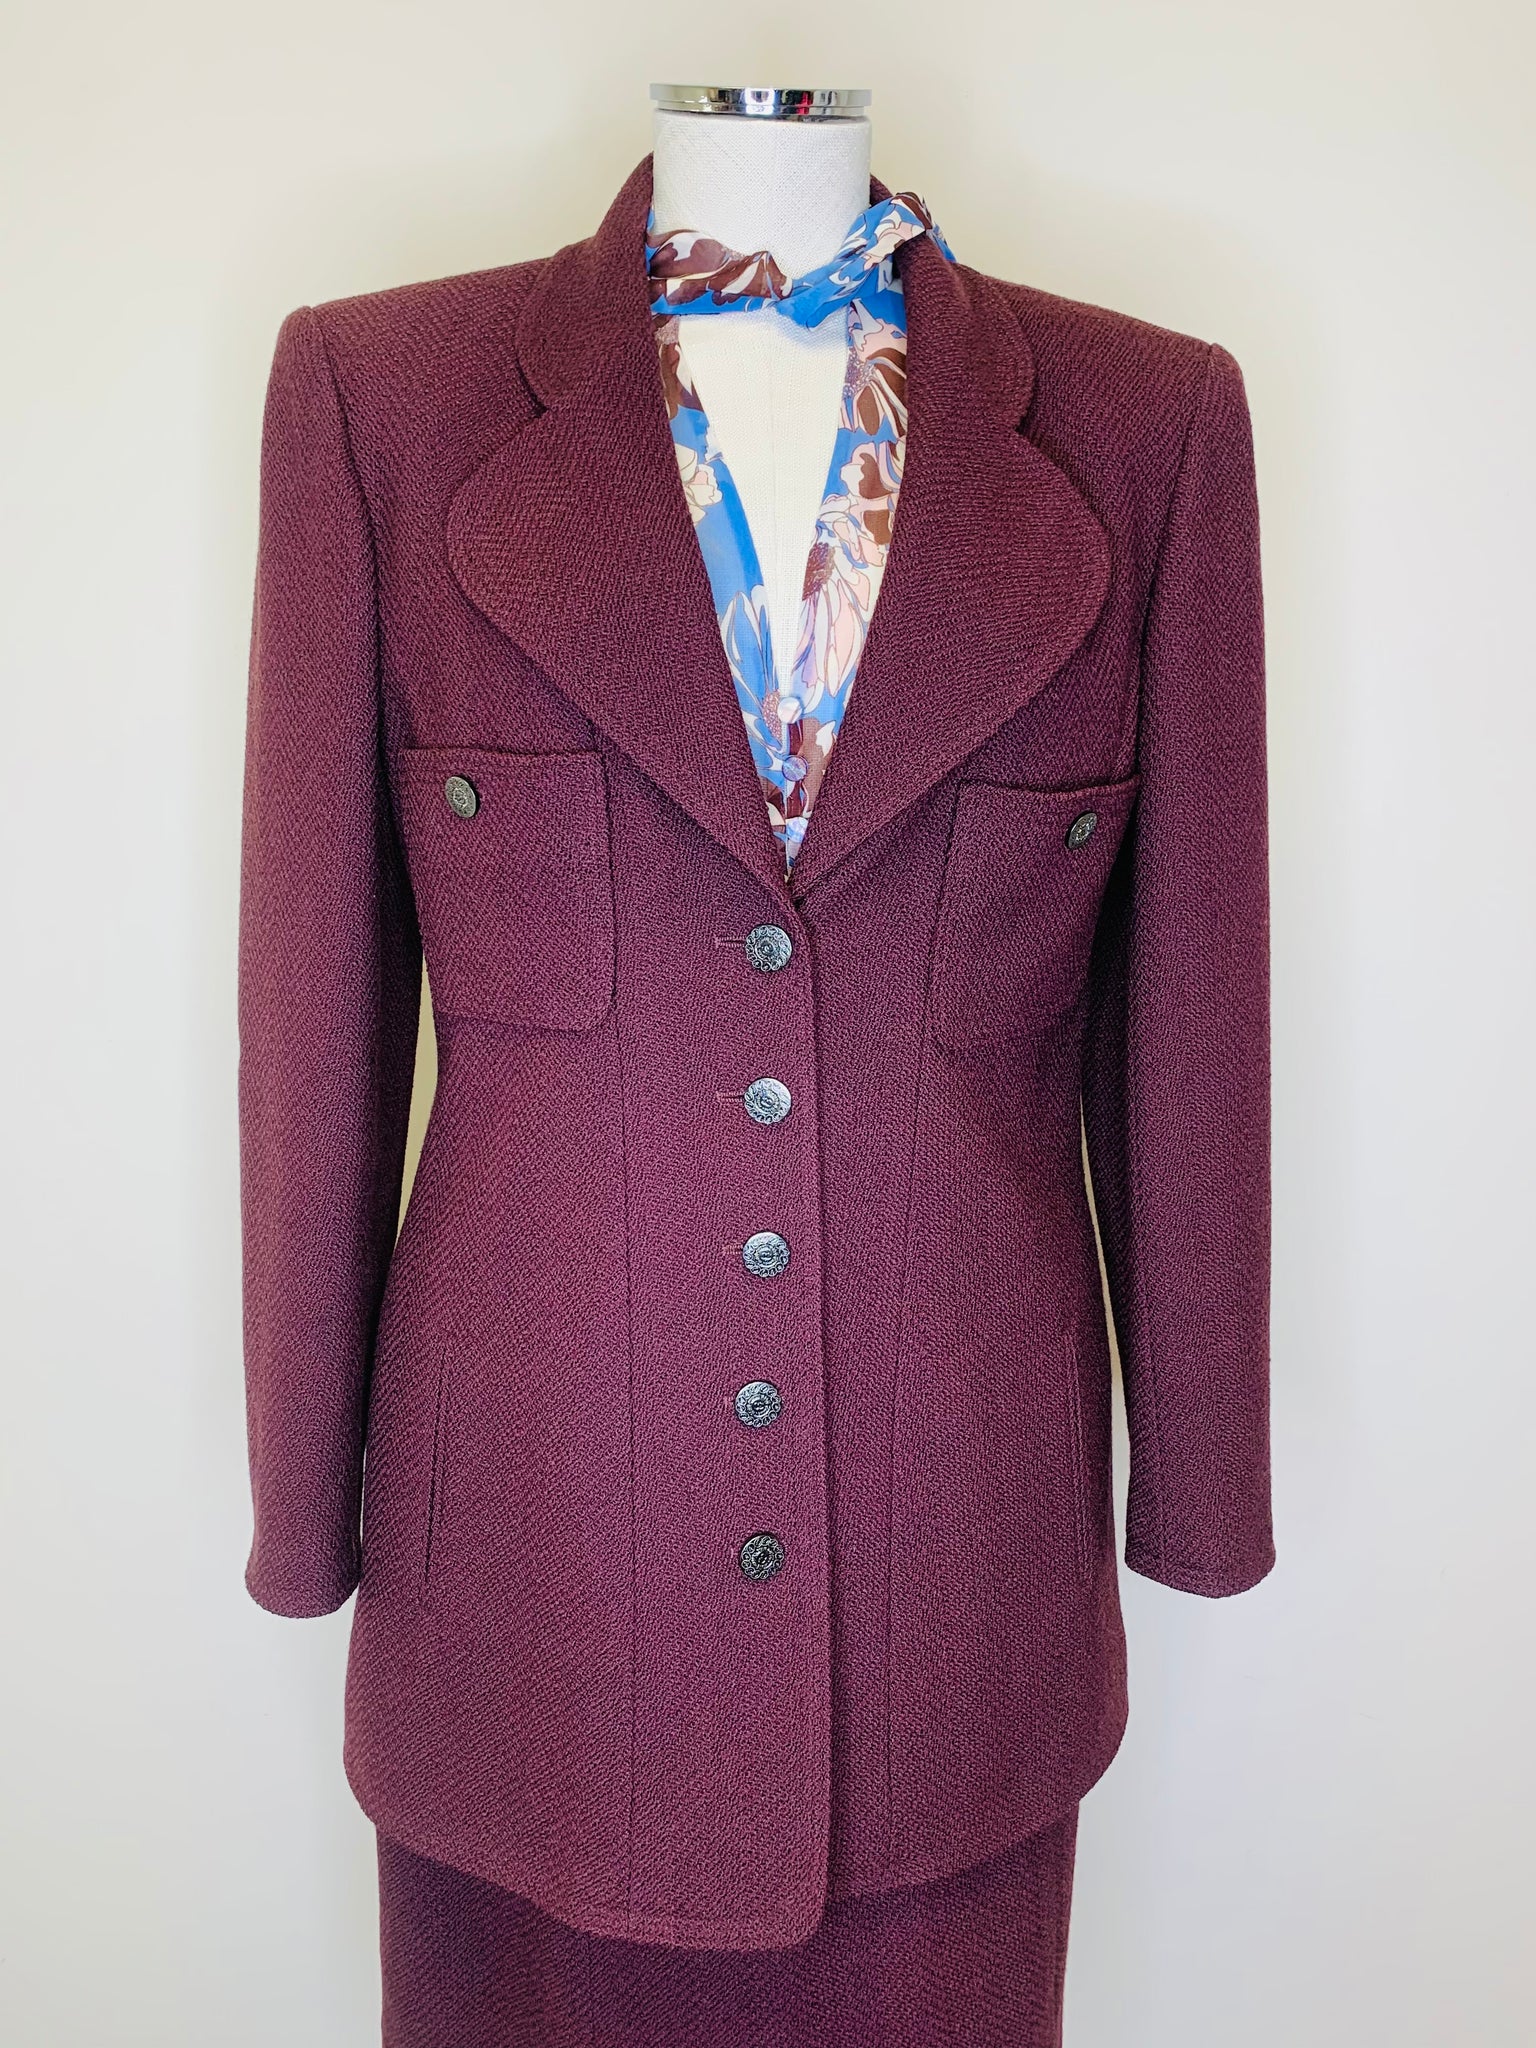 Vintage Chanel Tweed Blazer Jacket, Size 42